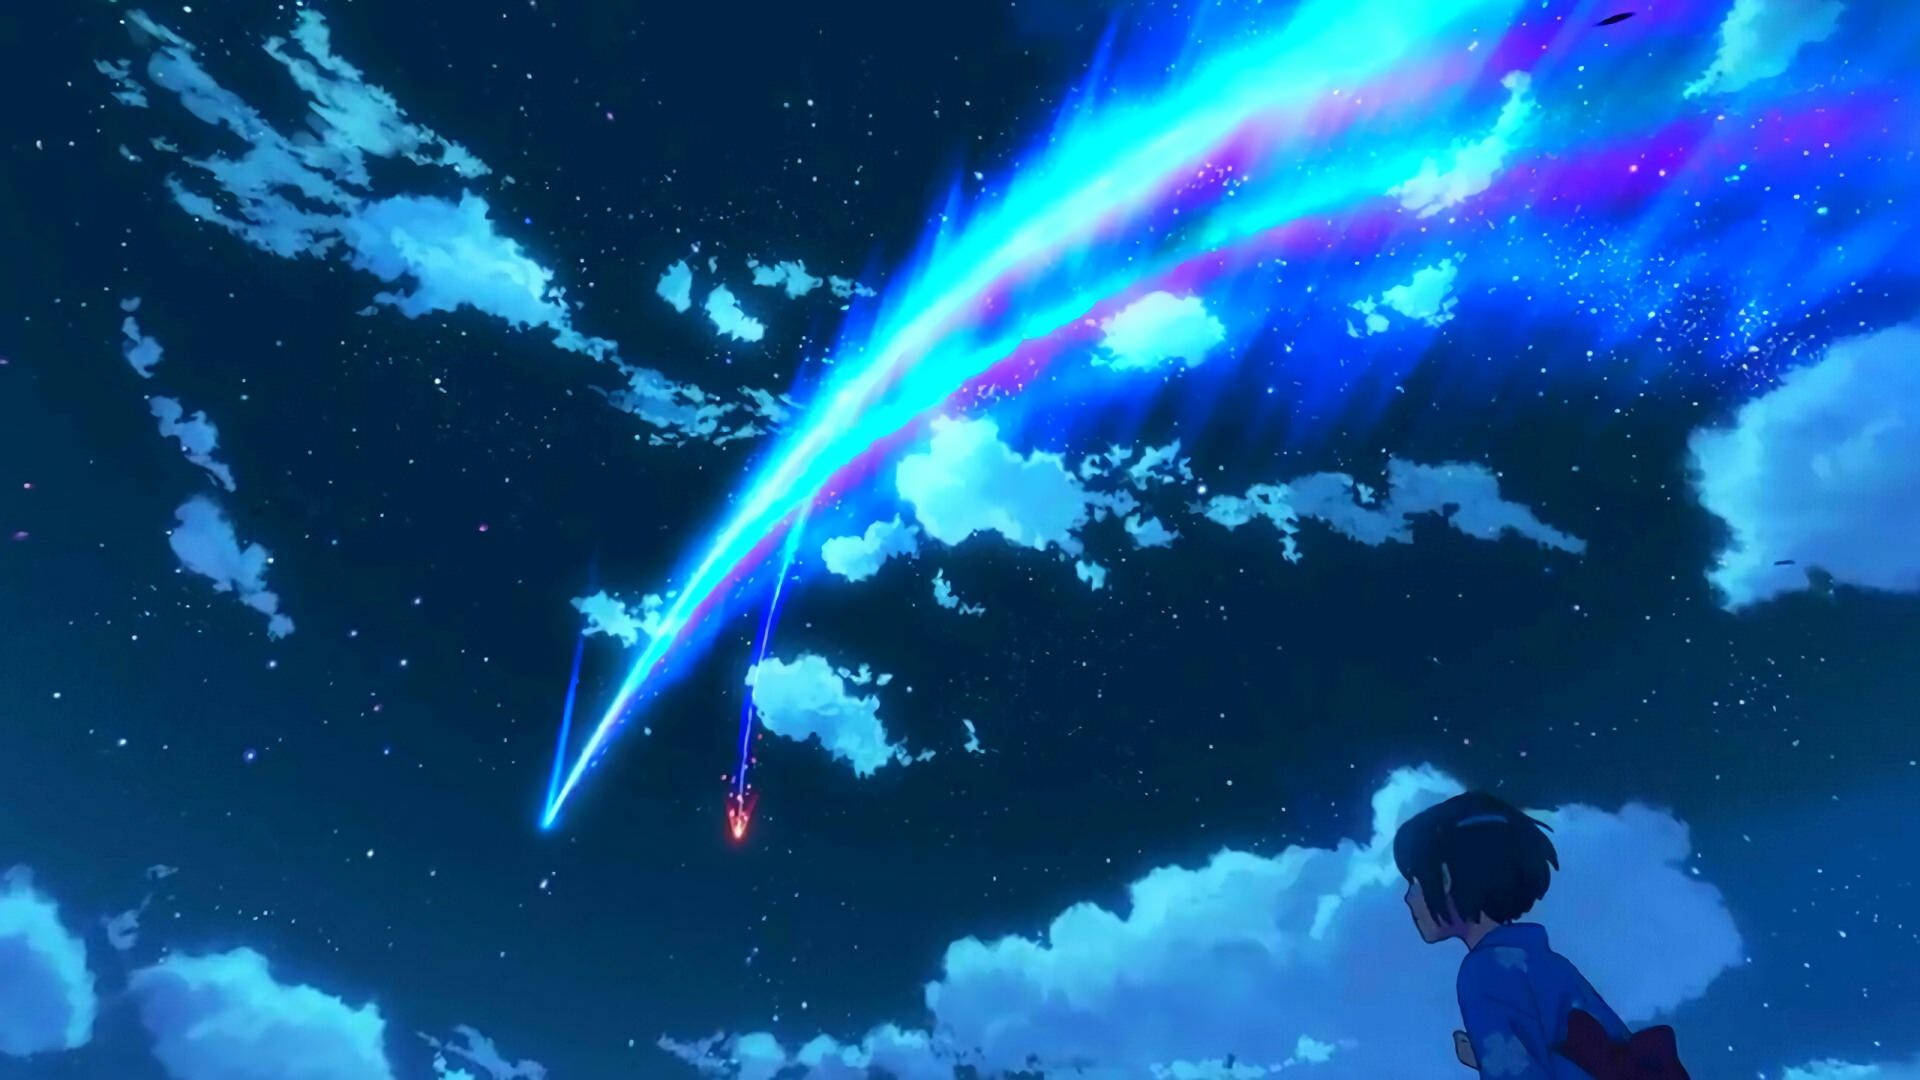 100+] Anime Night Sky Wallpapers 